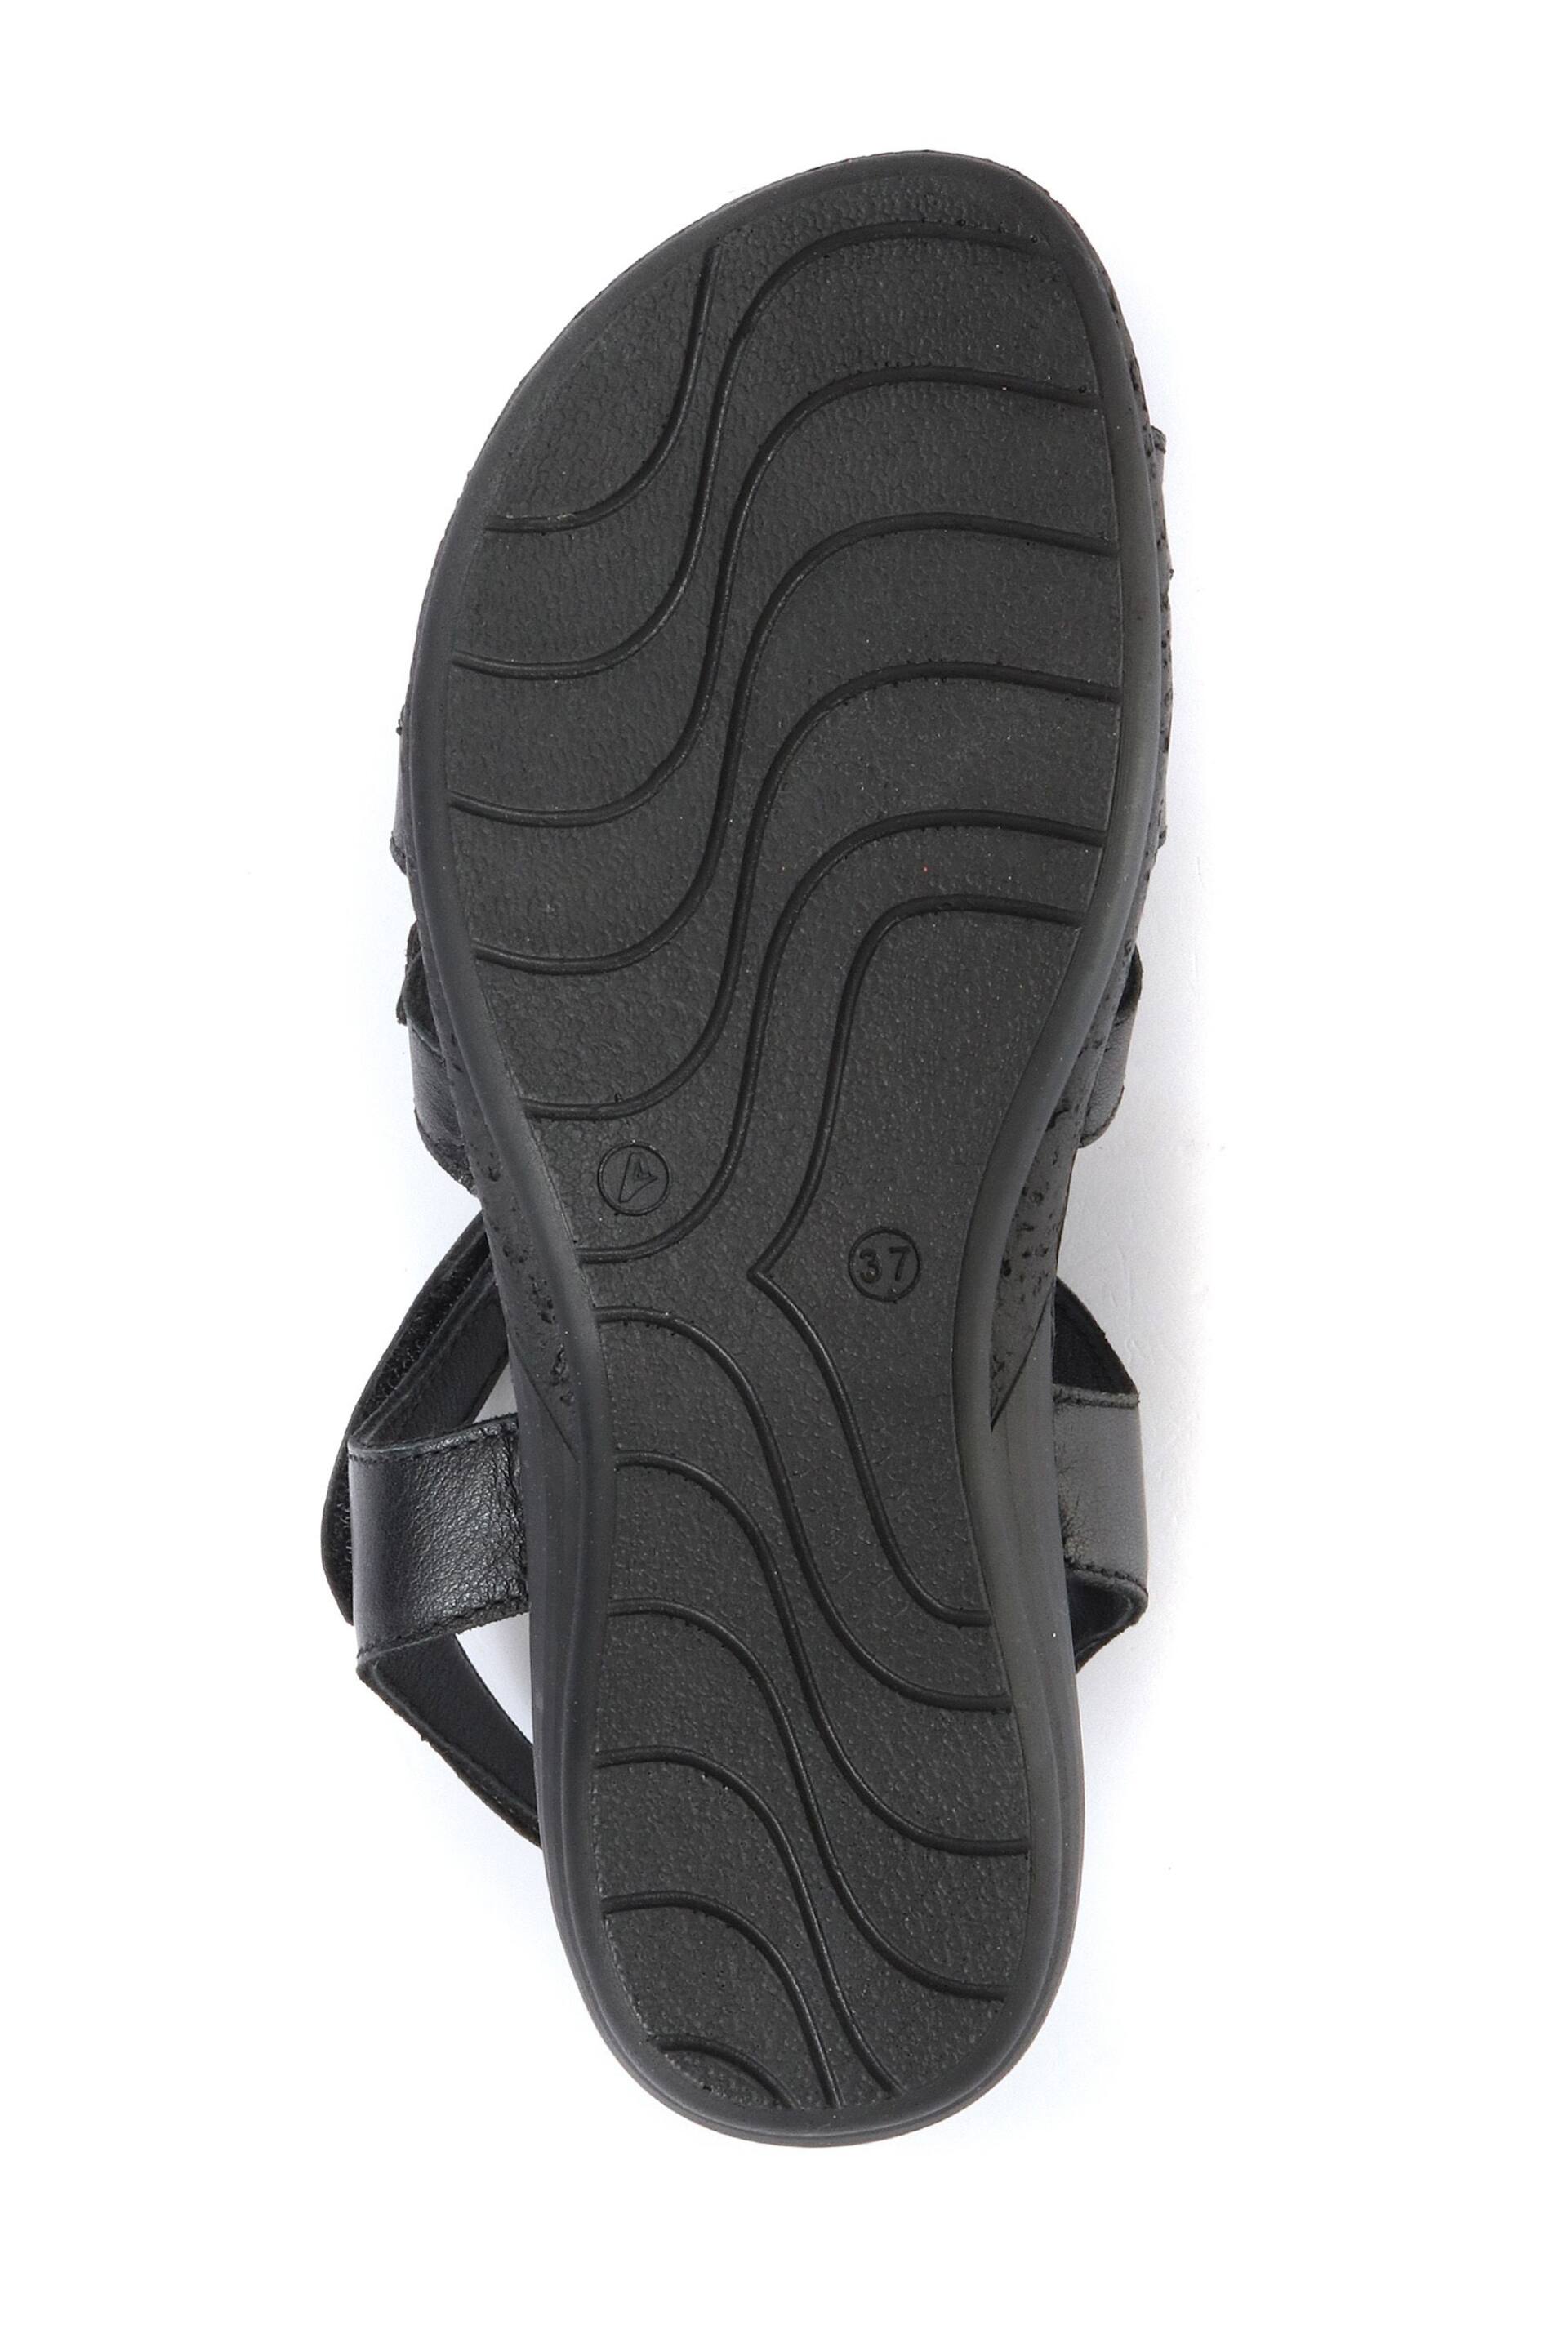 Pavers Black Ladies Leather T-Bar Sandals - Image 5 of 5